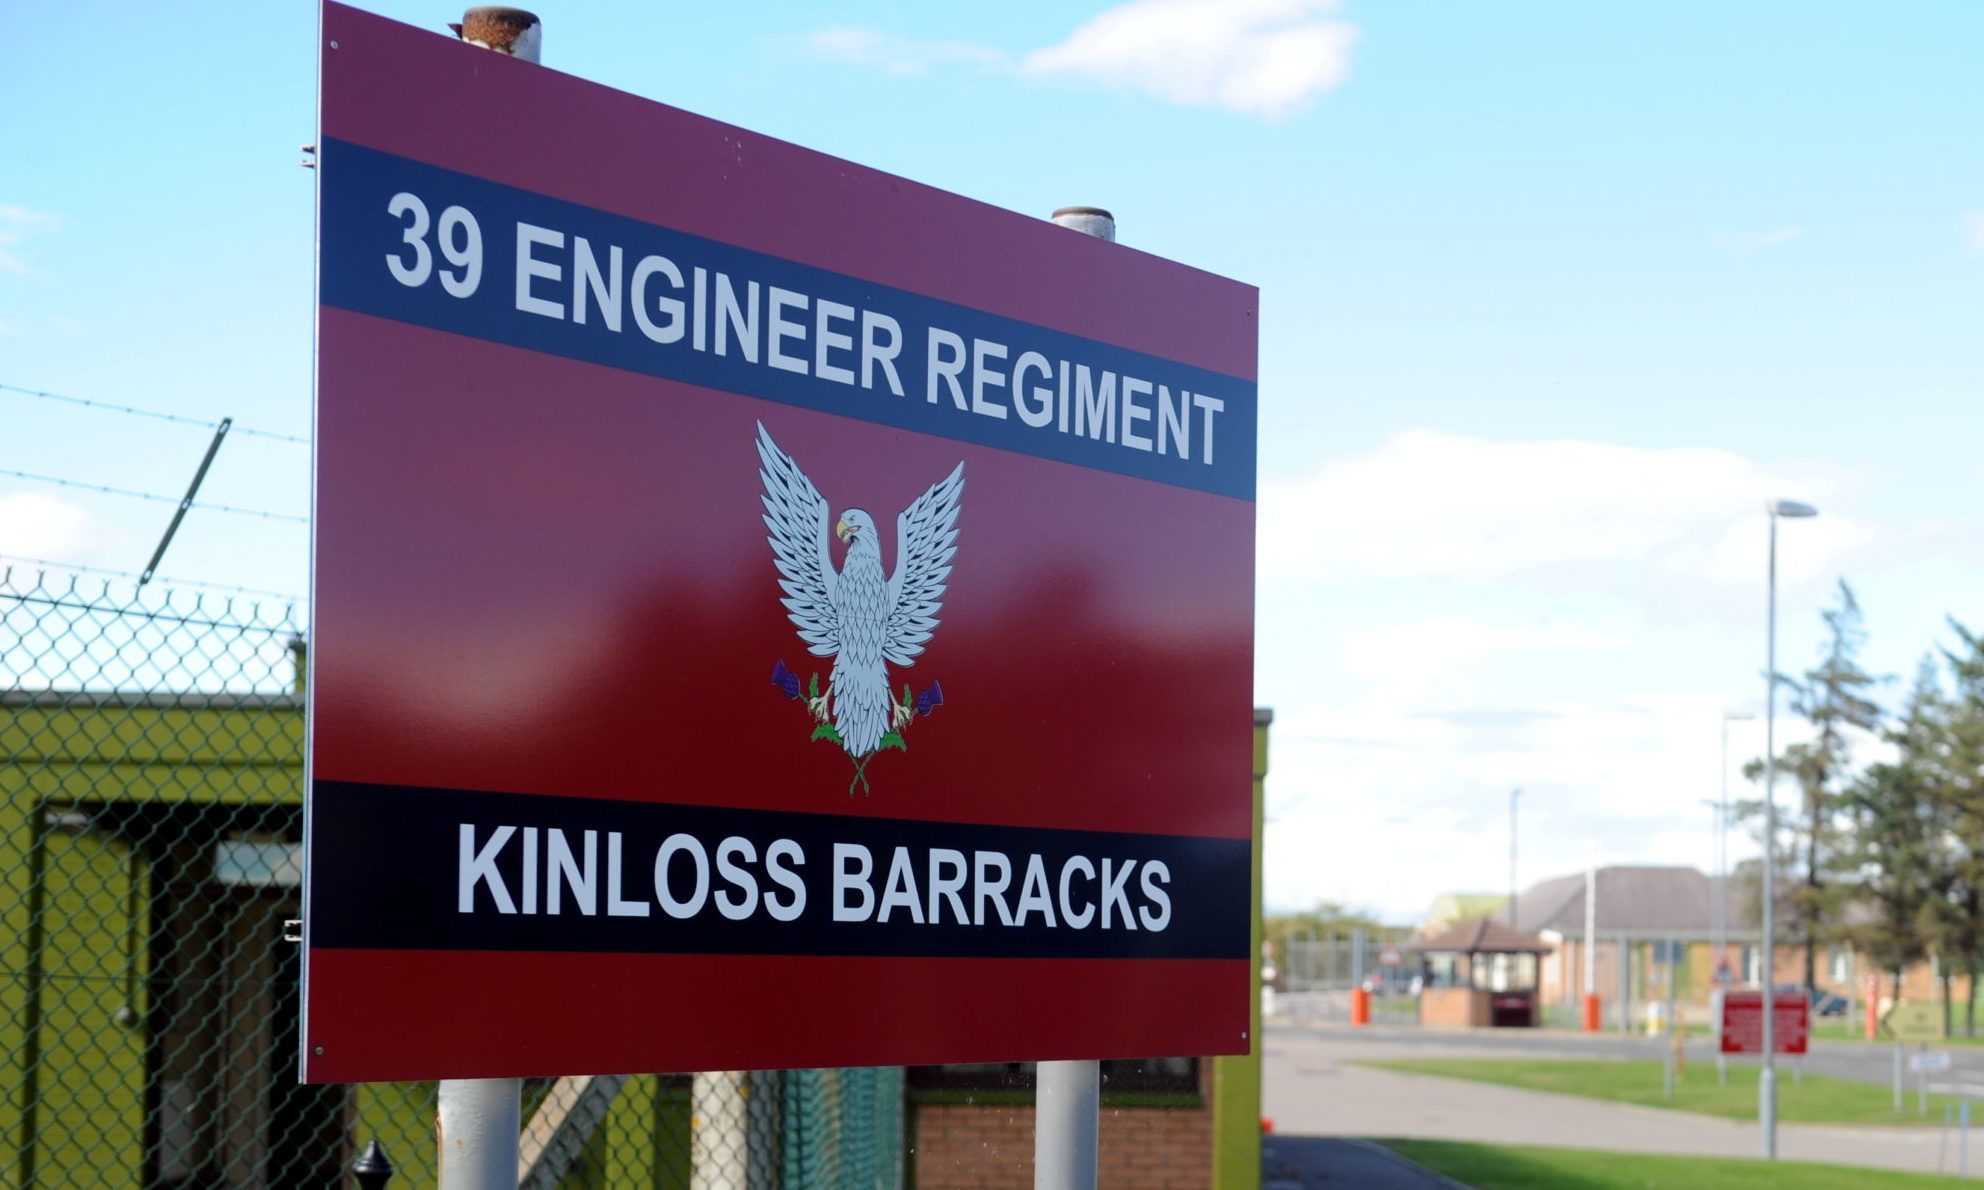 The main entrance to Kinloss Barracks.